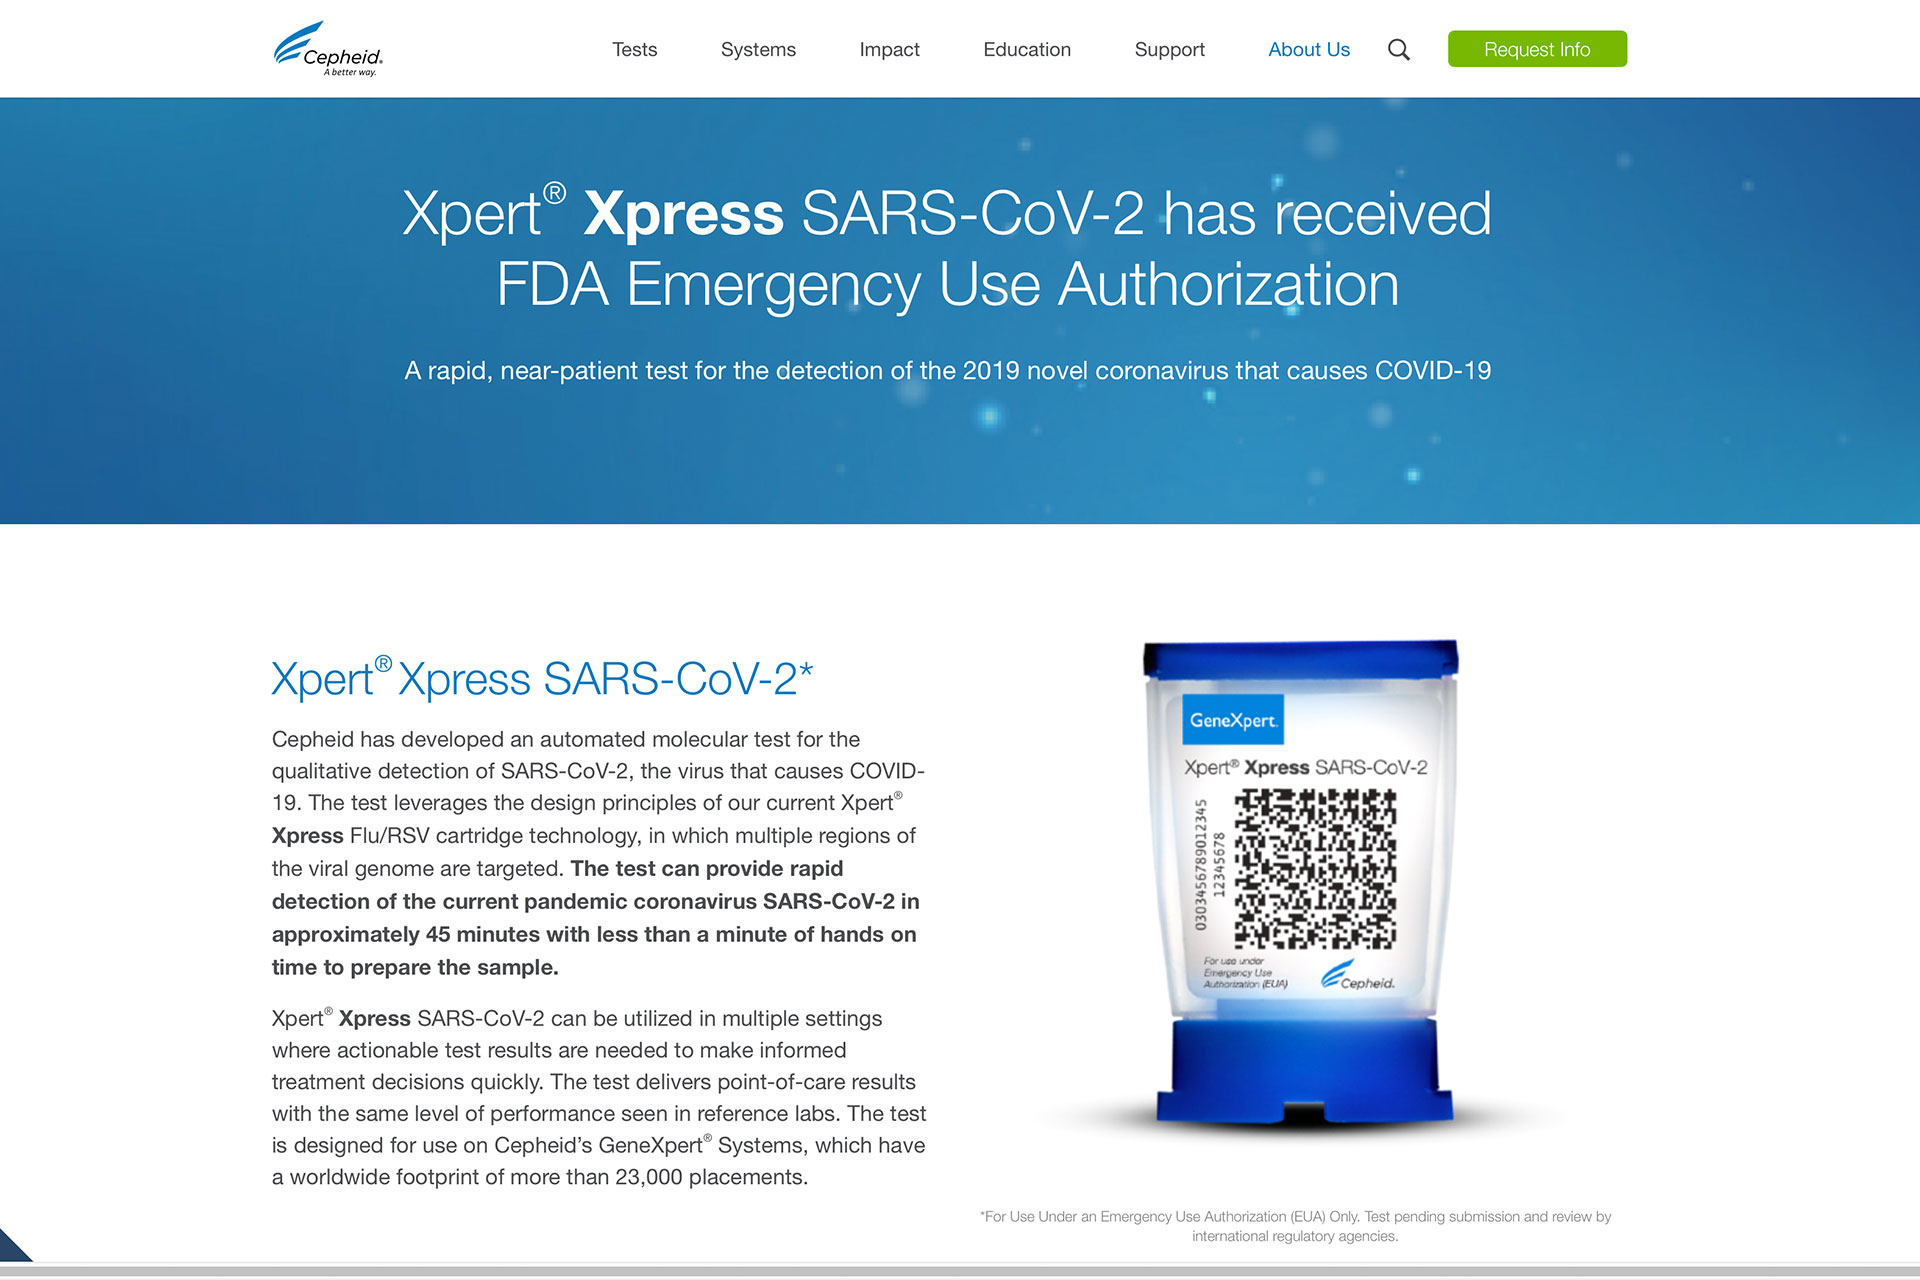 Cepheid Xpert Xpress